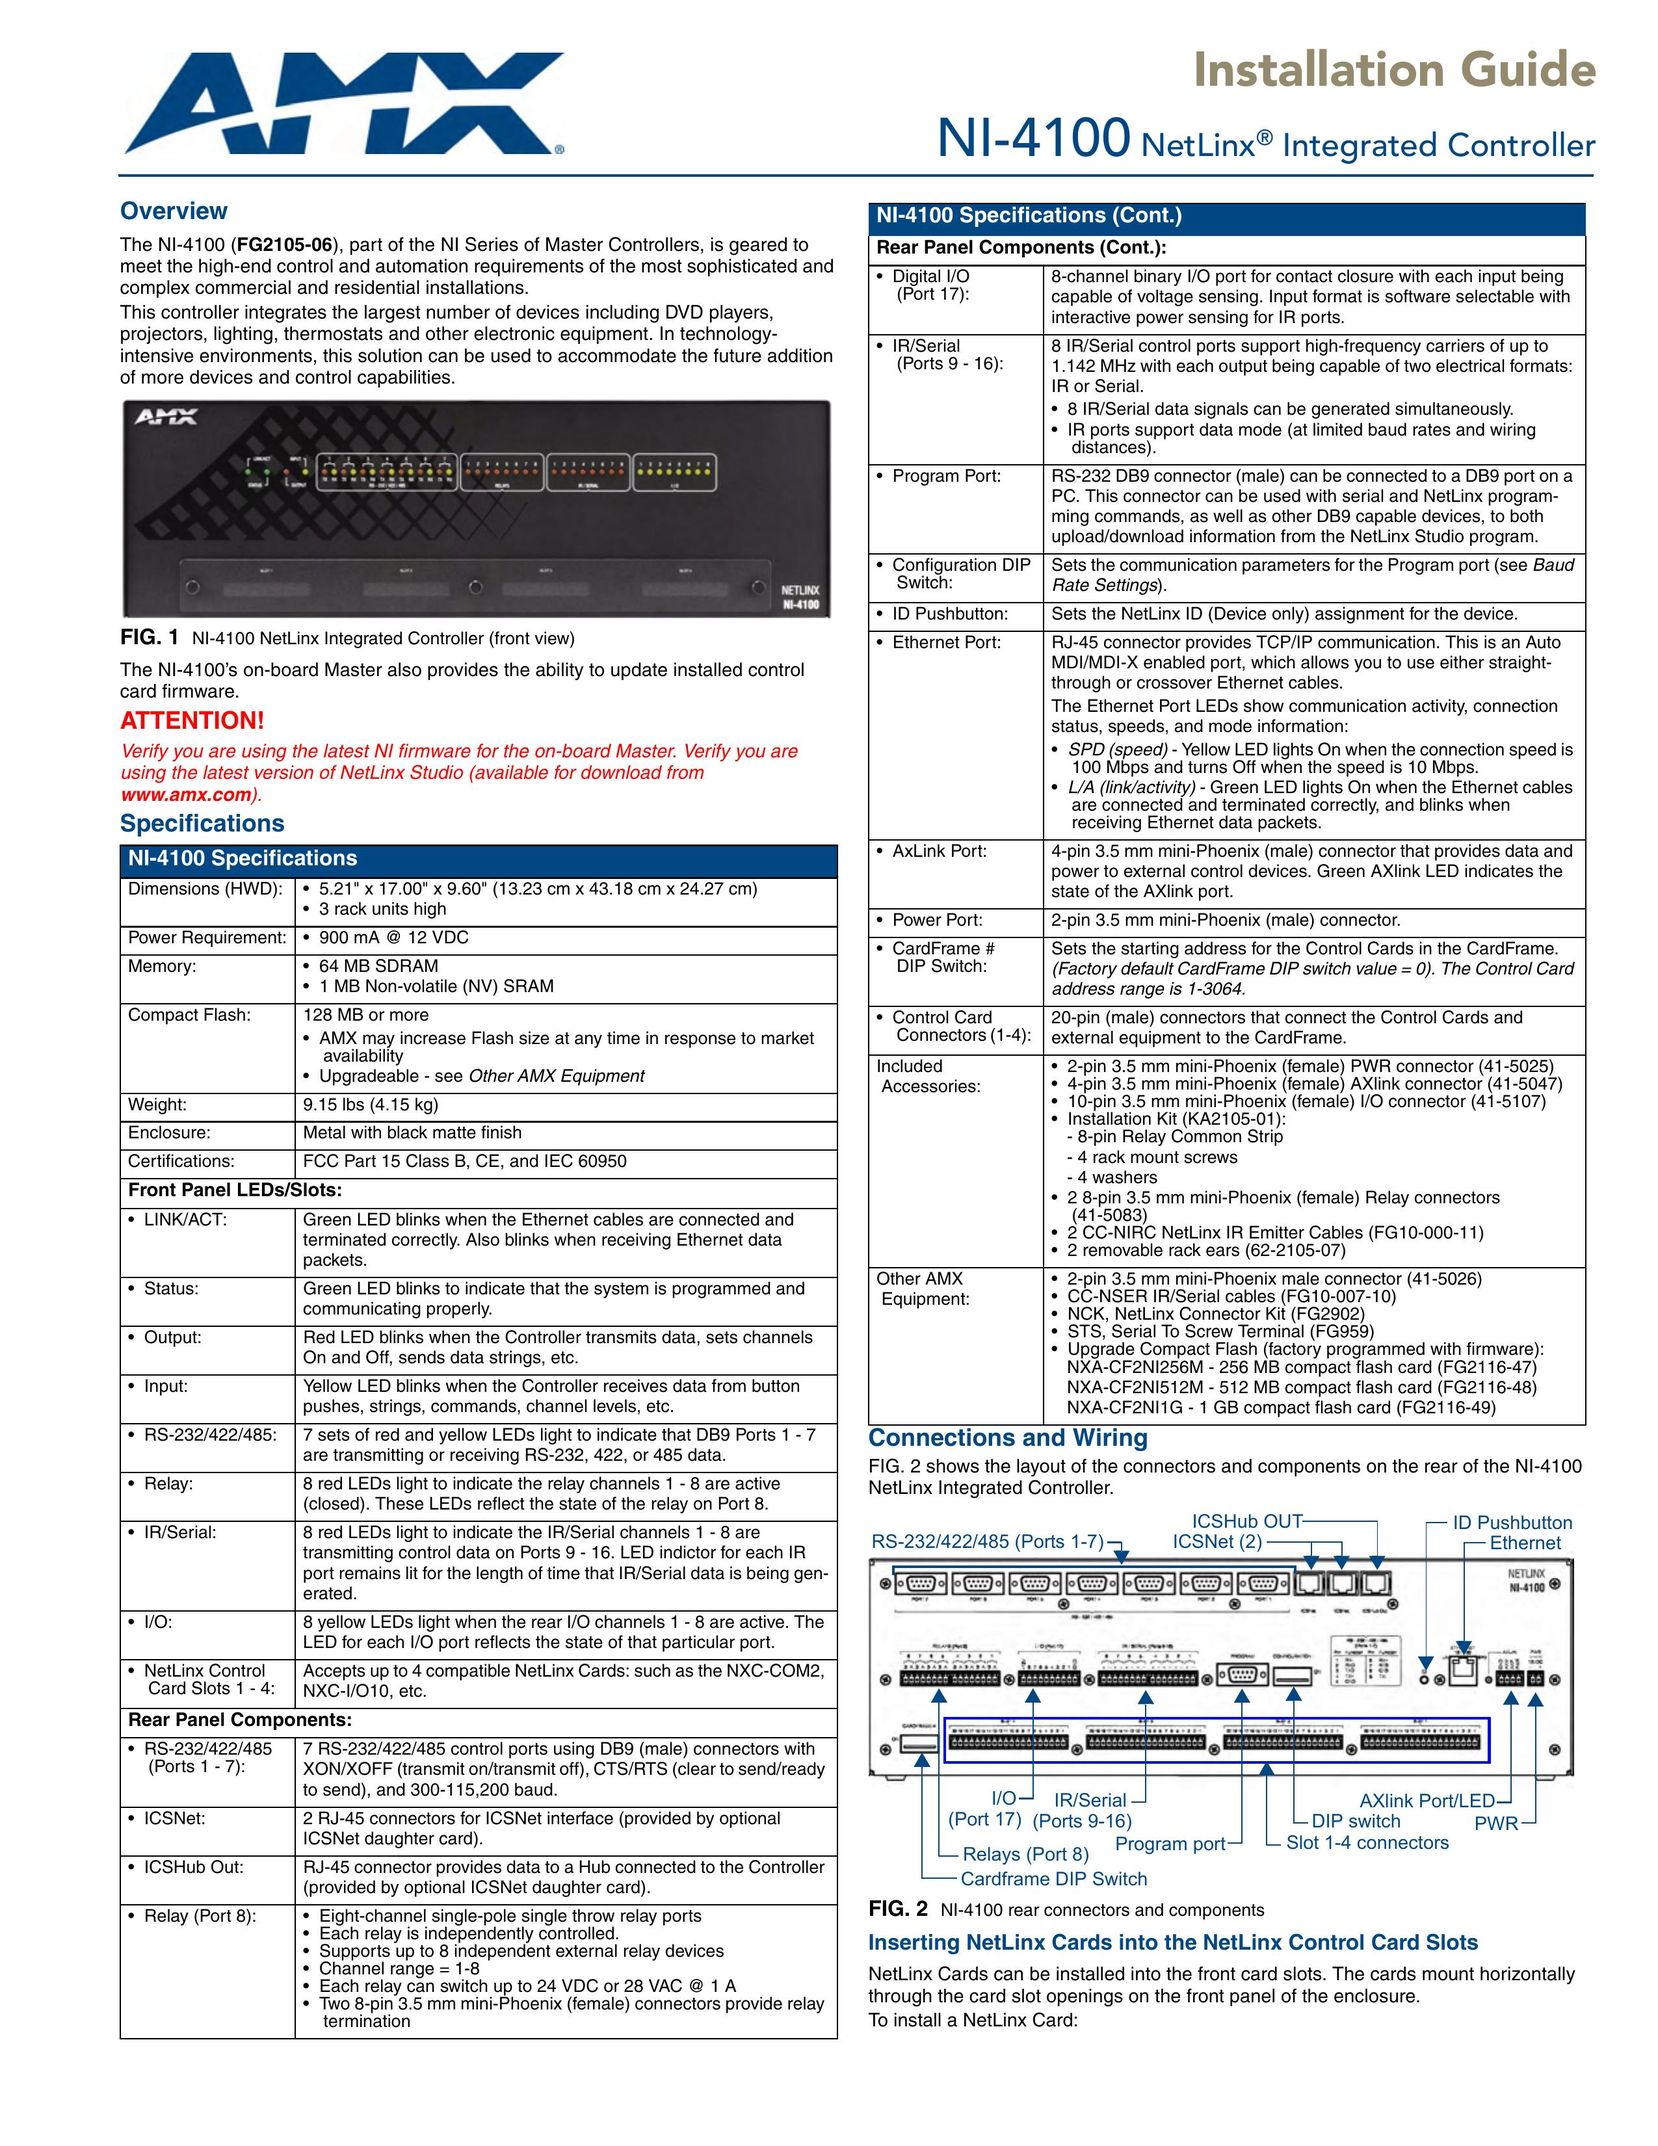 AMX NI-4100 Network Card User Manual